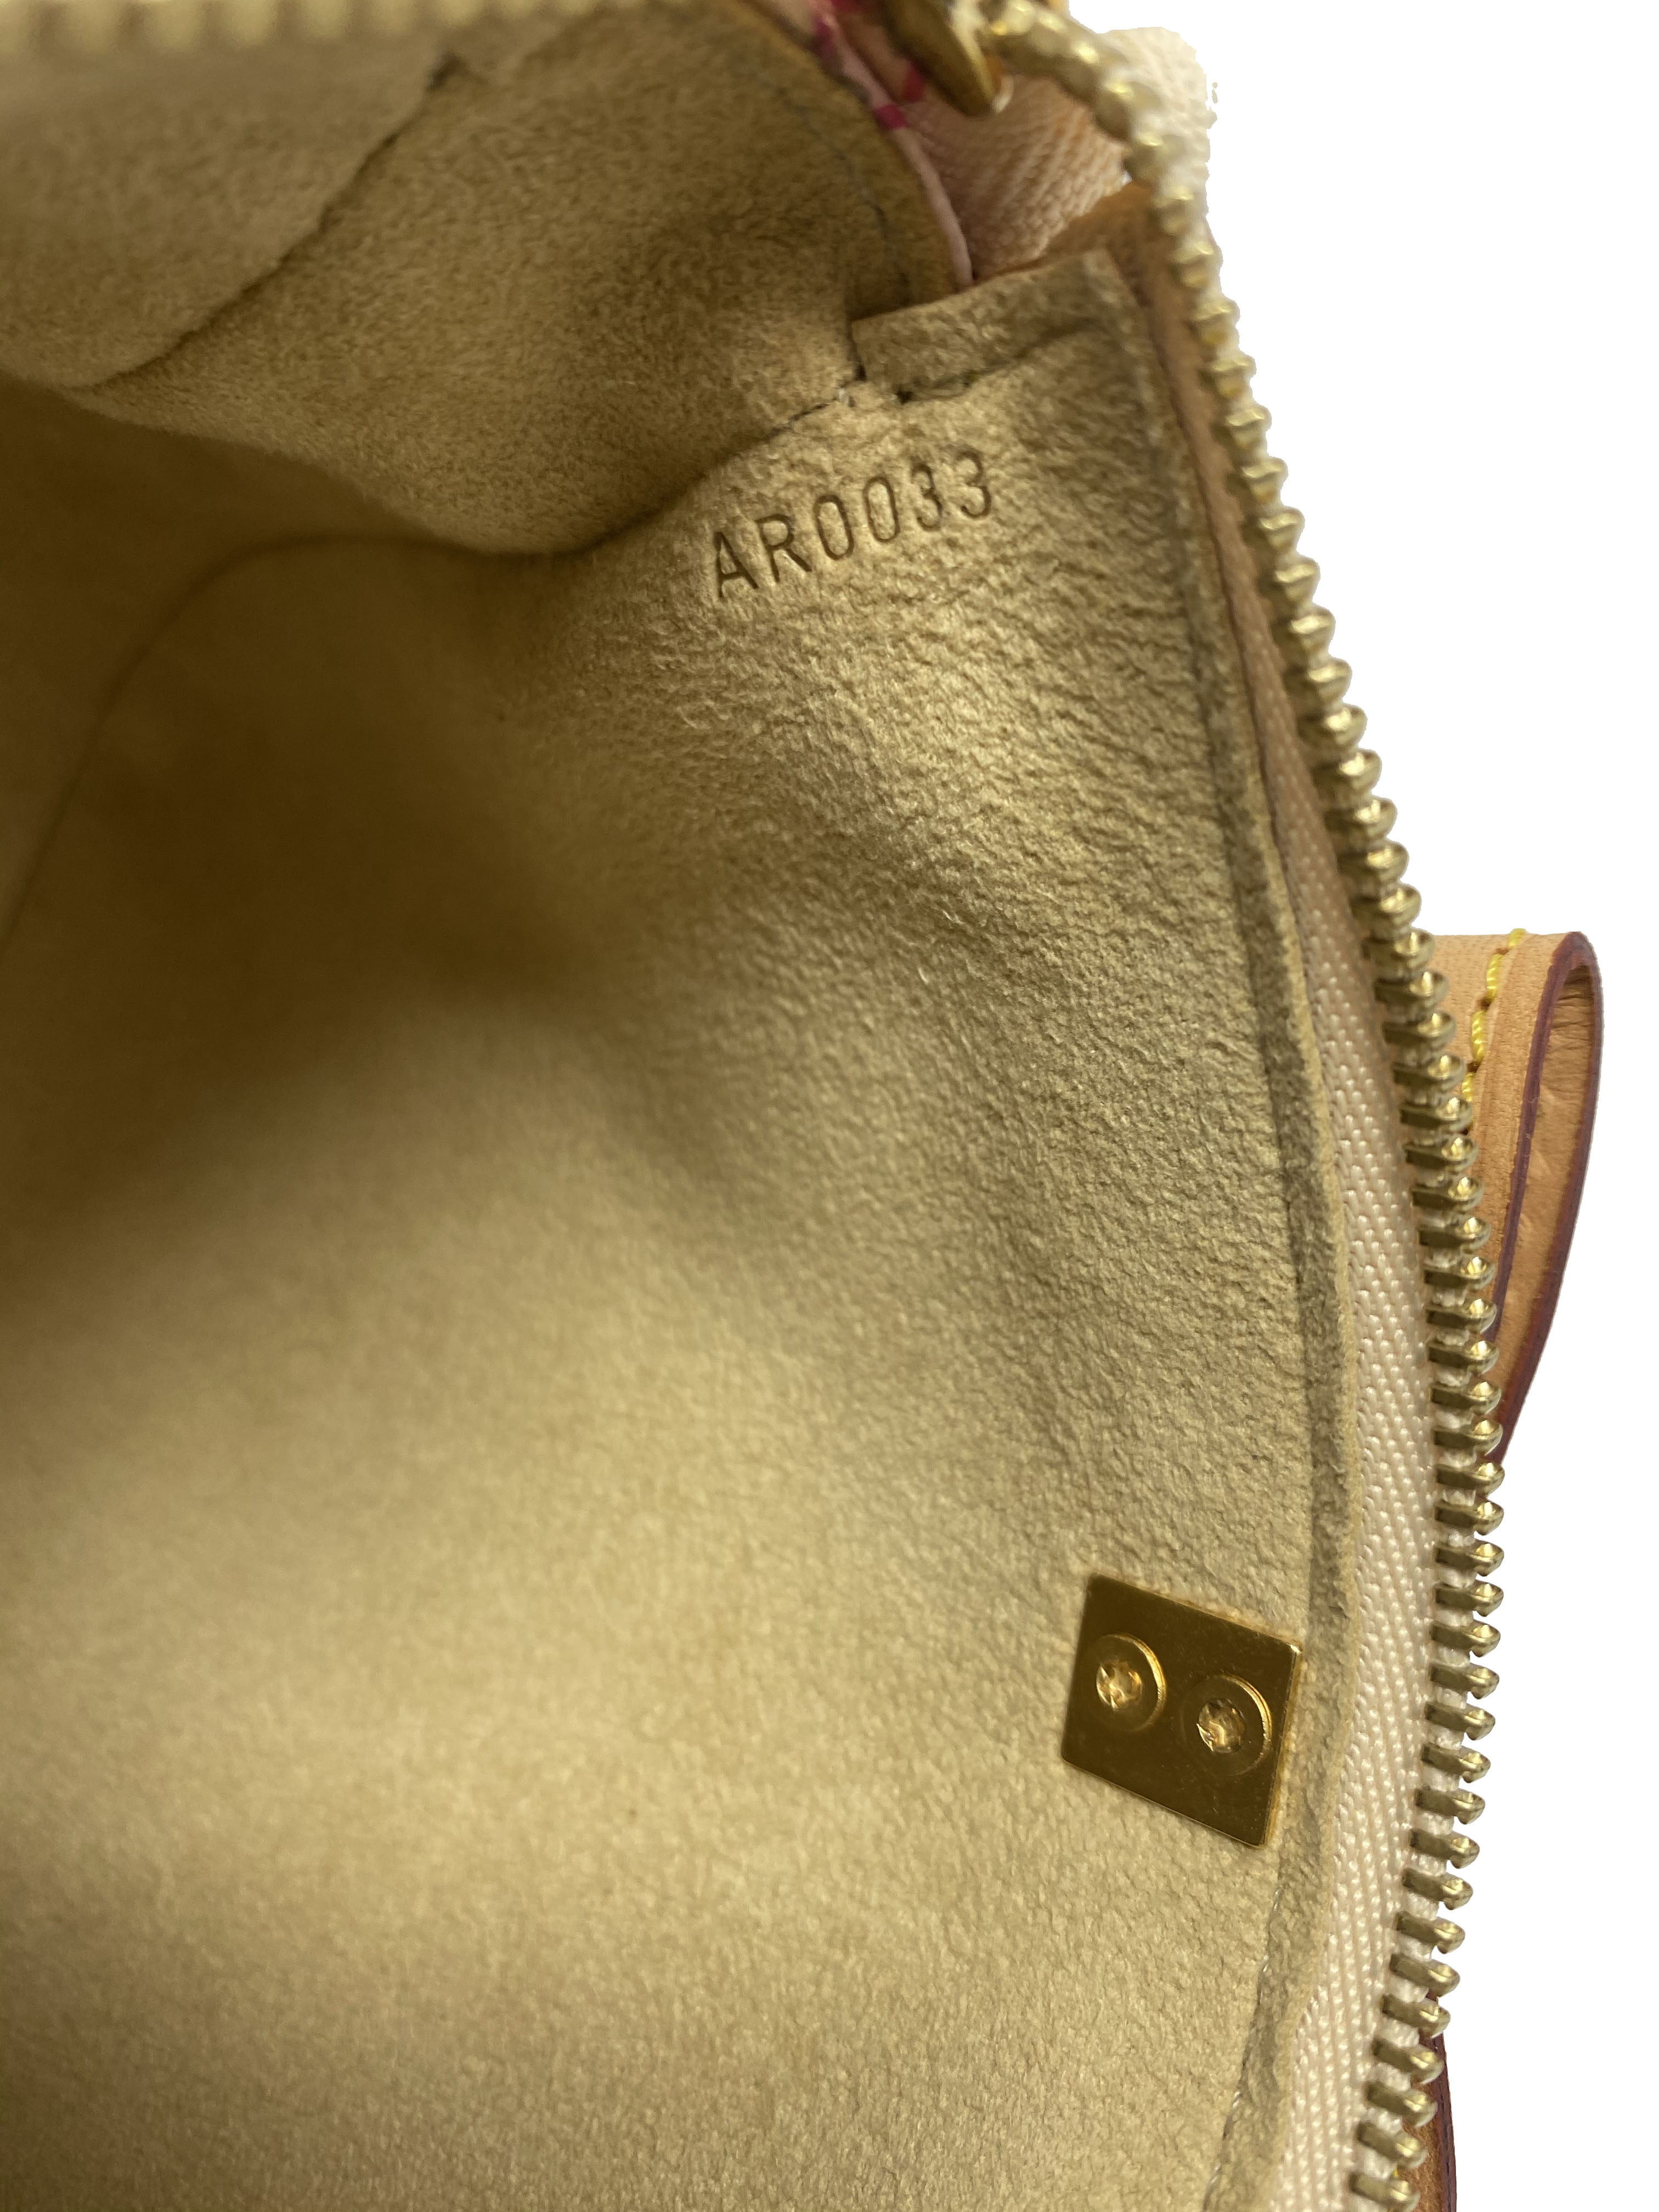 Louis Vuitton Murakami Cherry Pochette (SL1024) – Luxury Leather Guys